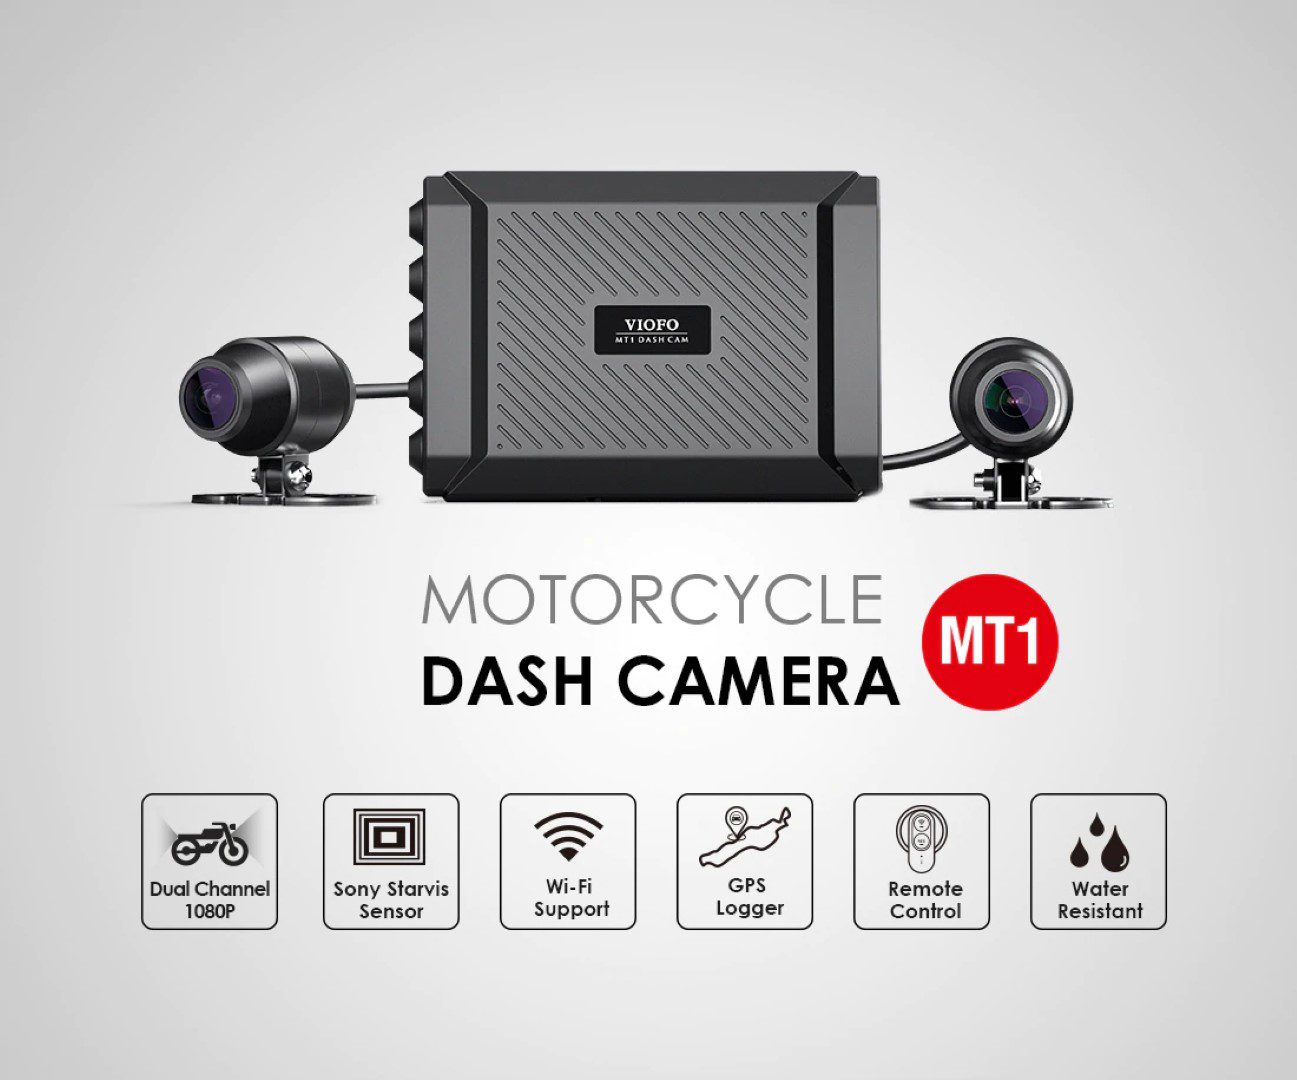 VIOFO MT1 Motorcycle Dash Cam 1080P HD Night Vision Motorcycle DVR